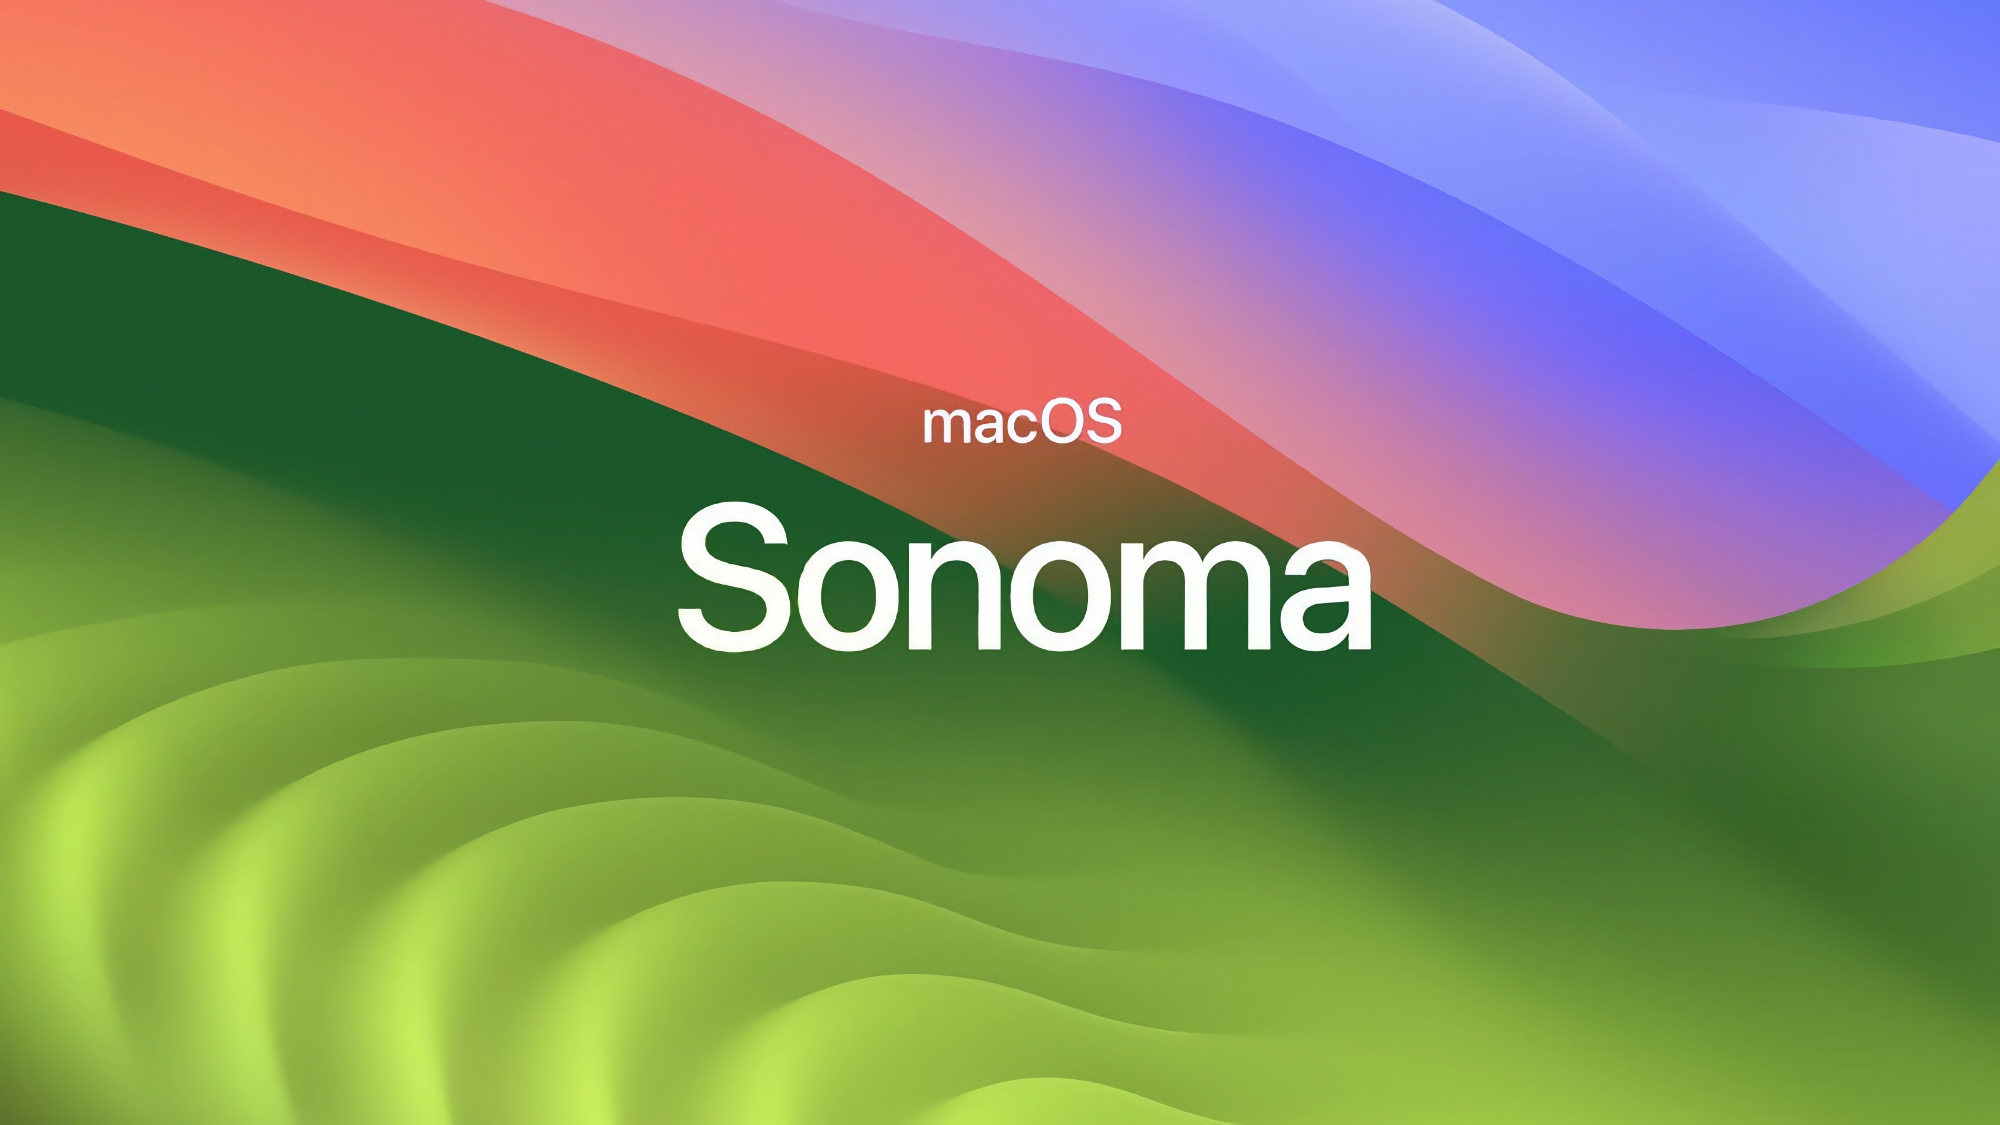 Po iOS 17.5 Beta 3 i iPadOS 17.5 Beta 3: Apple rozpoczęło testy macOS Sonoma 14.5 Beta 3